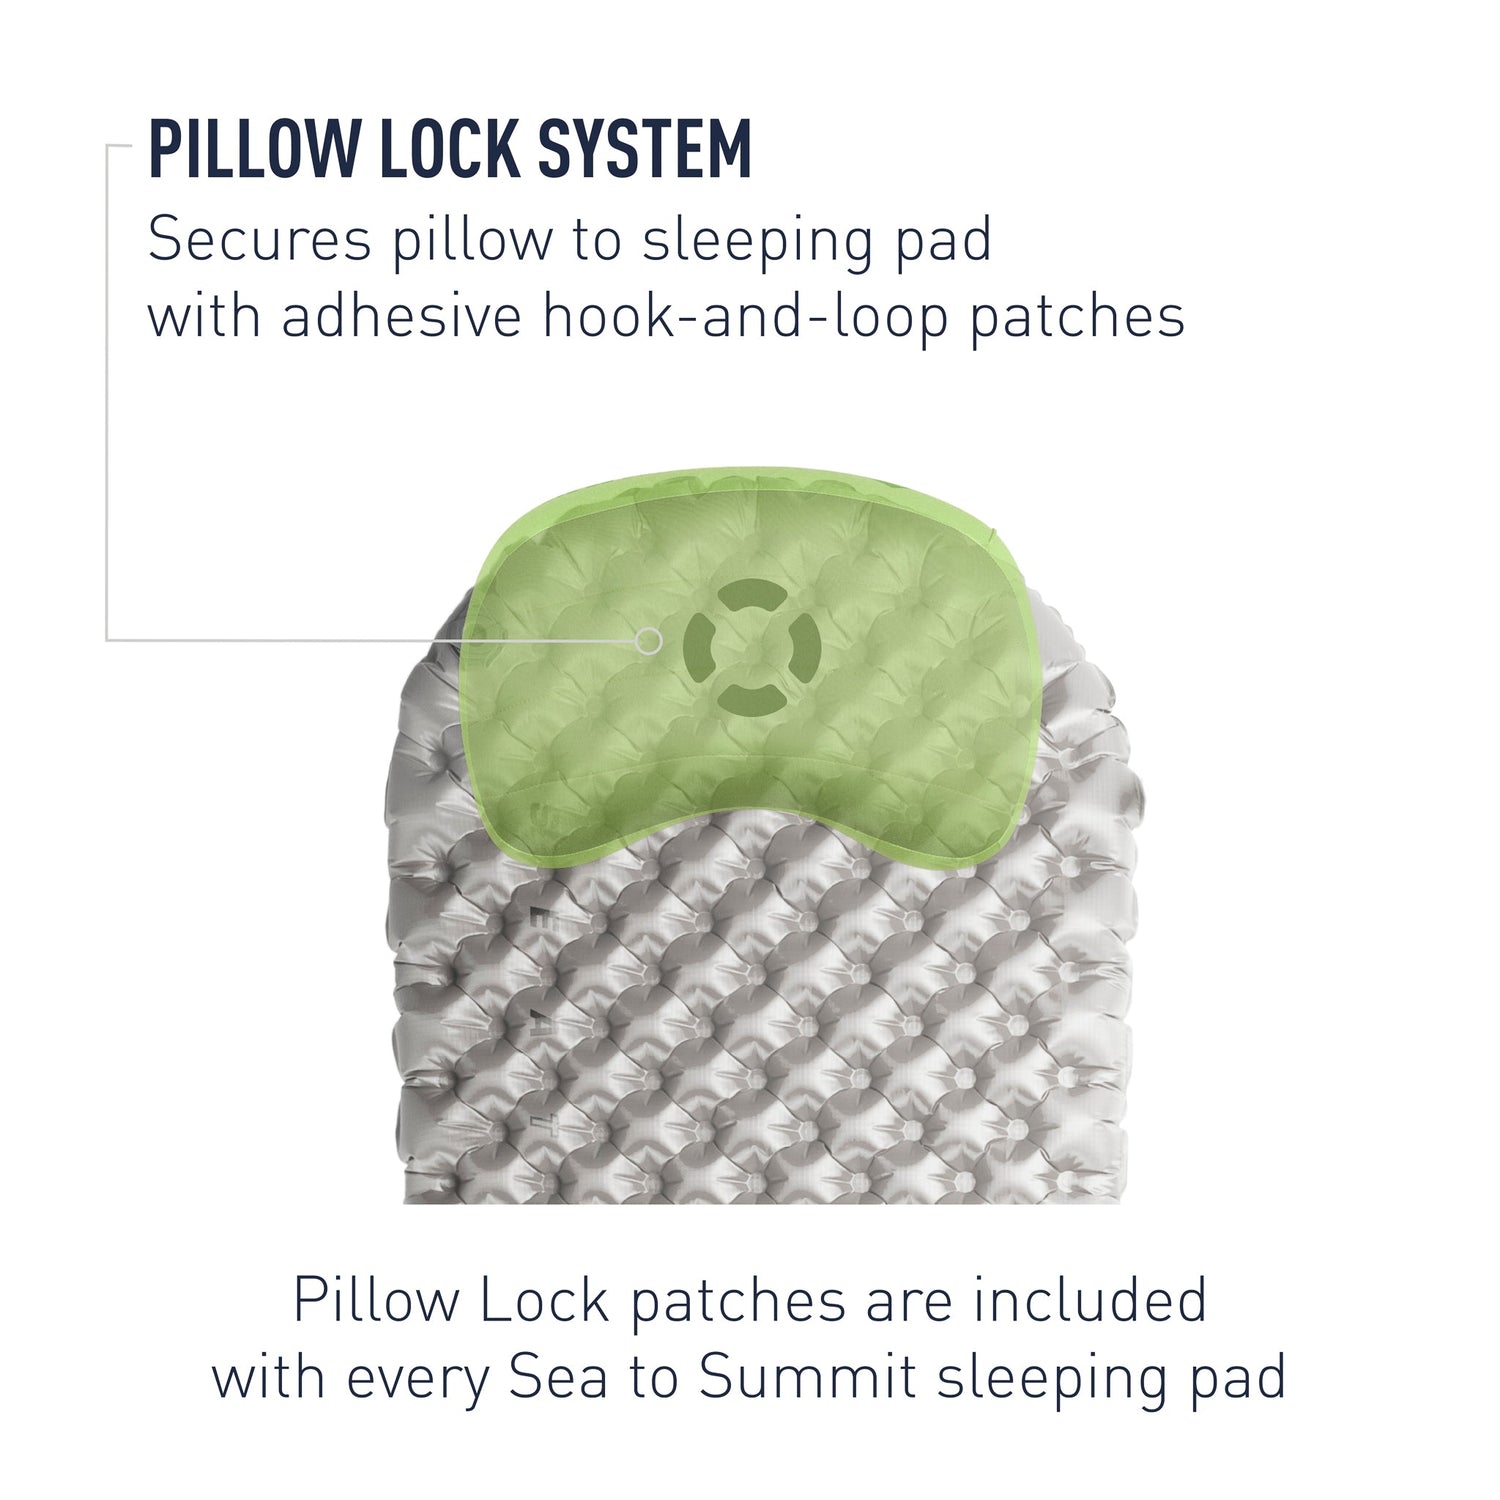 Sea to Summit Aeros Premium Pillow - Regular - Drifters Adventure Centre